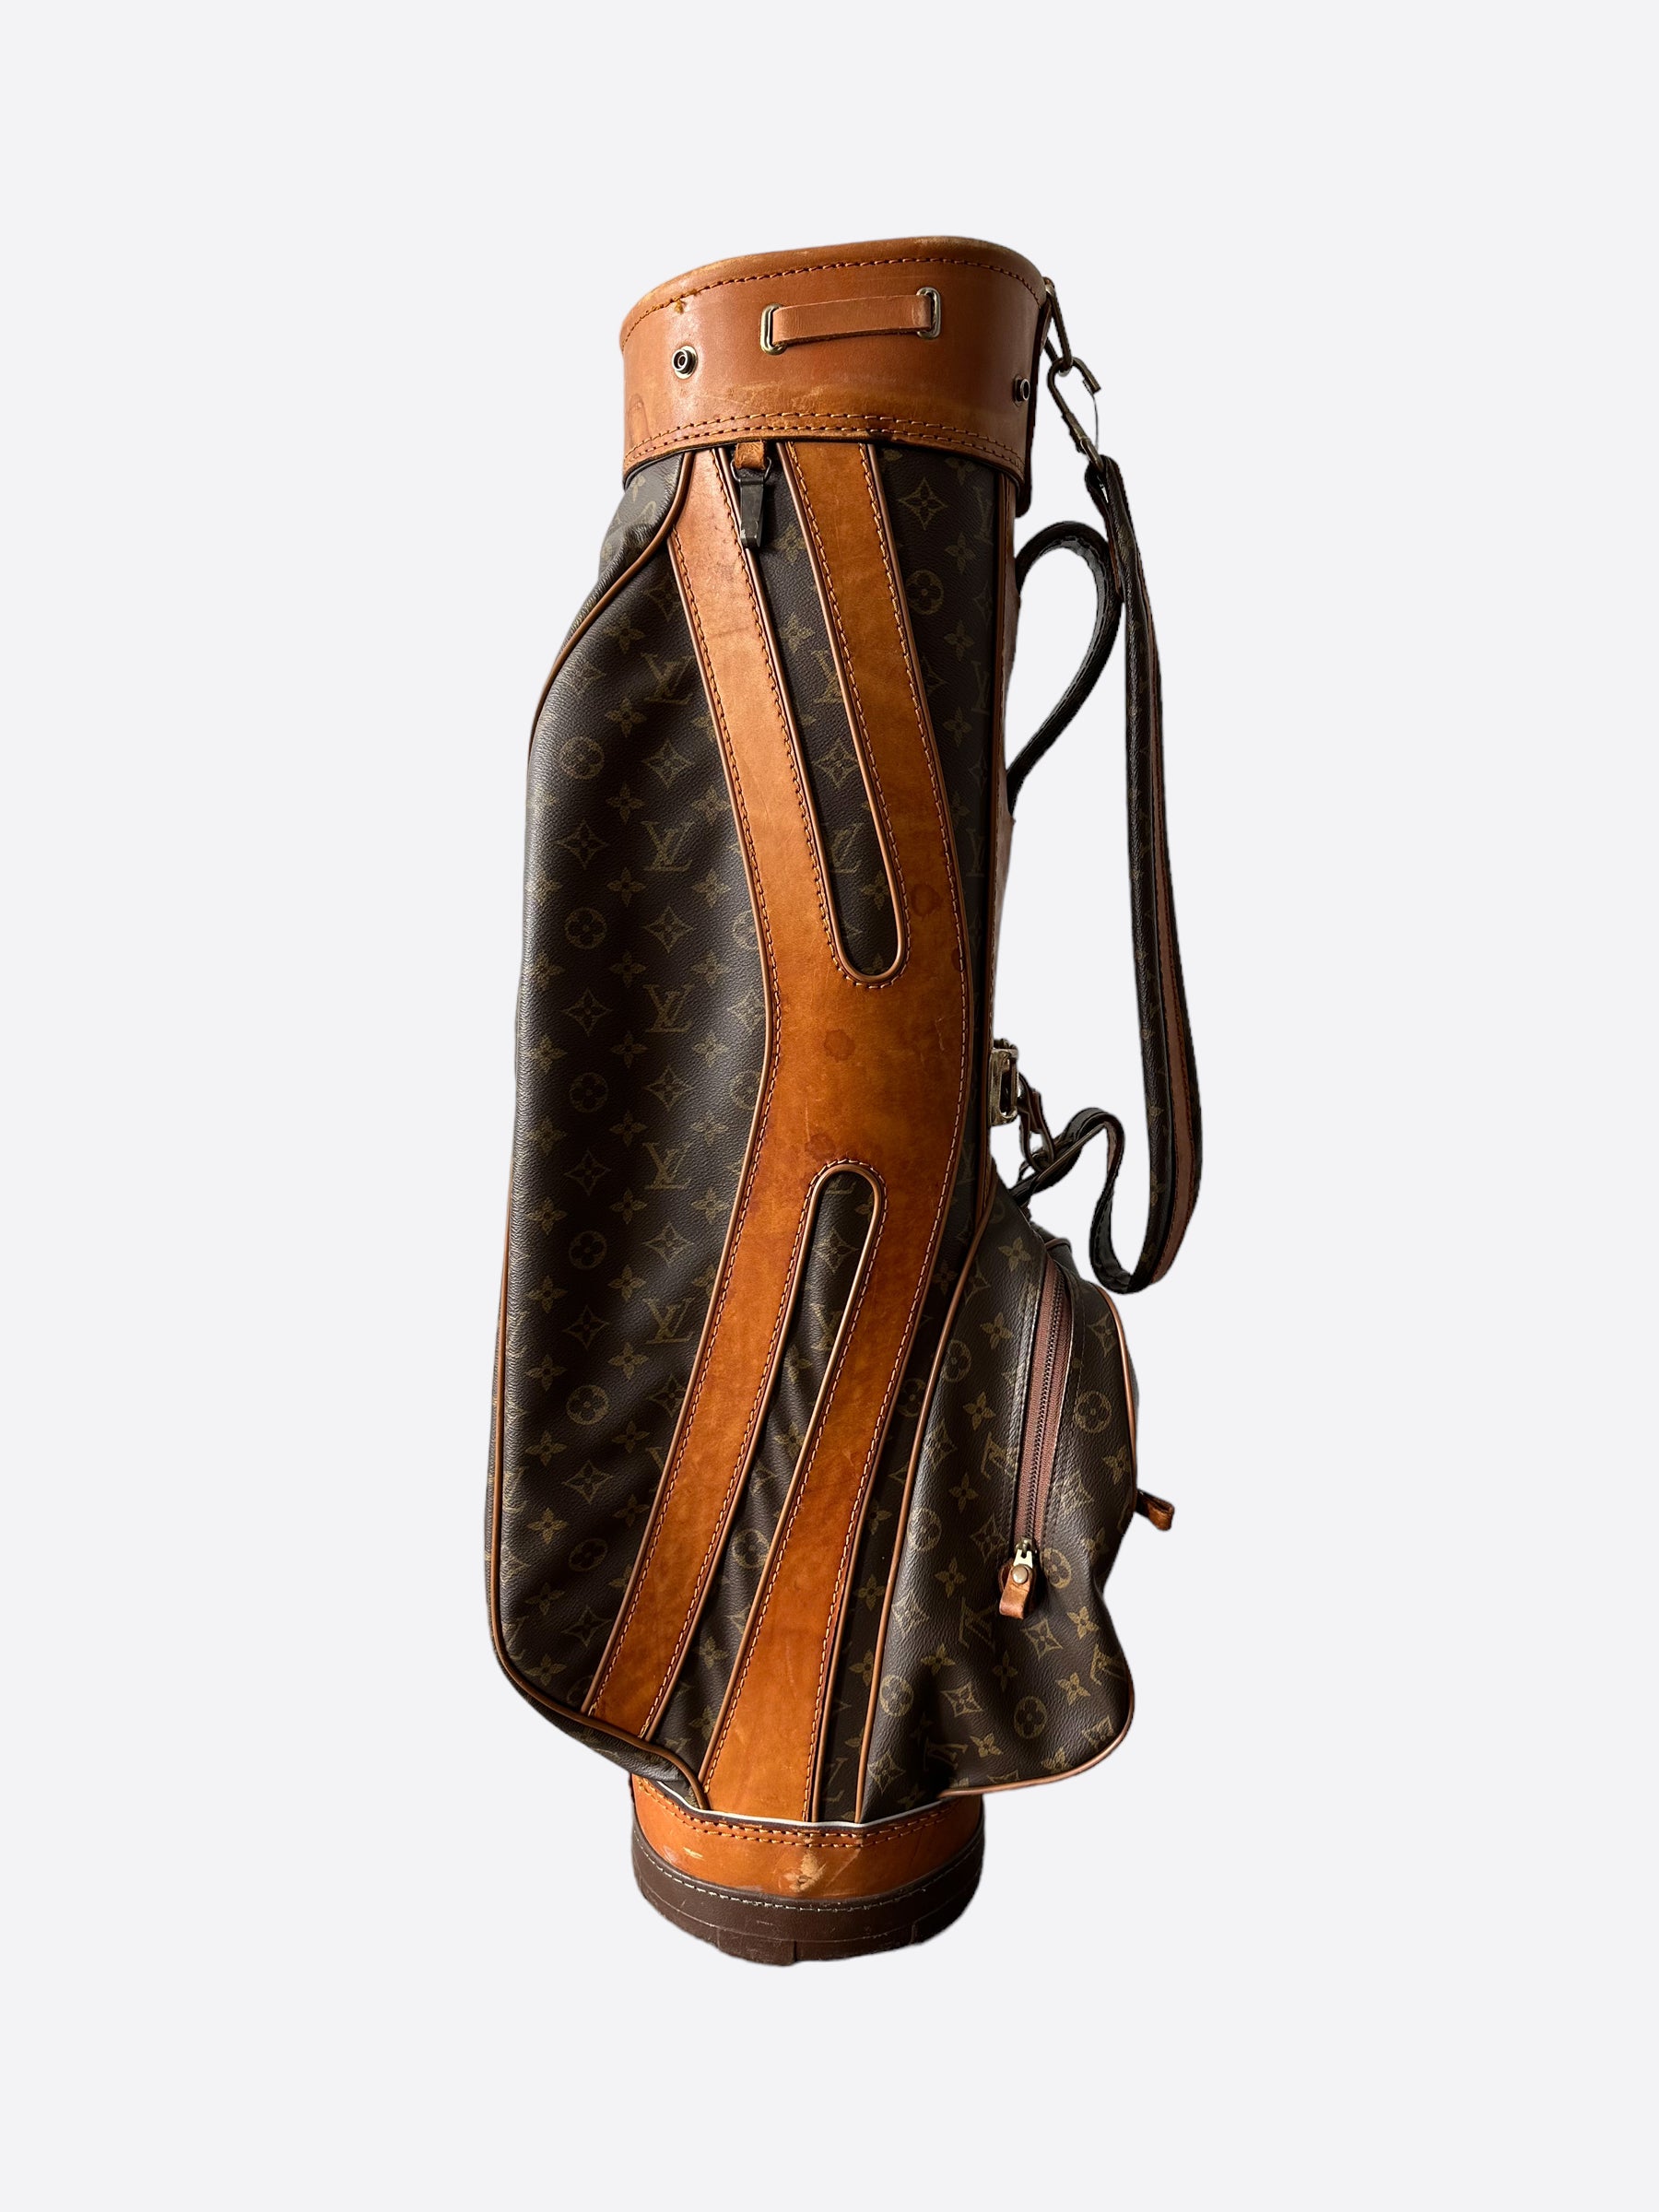 Louis Vuitton Golf Bag  Bags, Louis vuitton, Golf bags